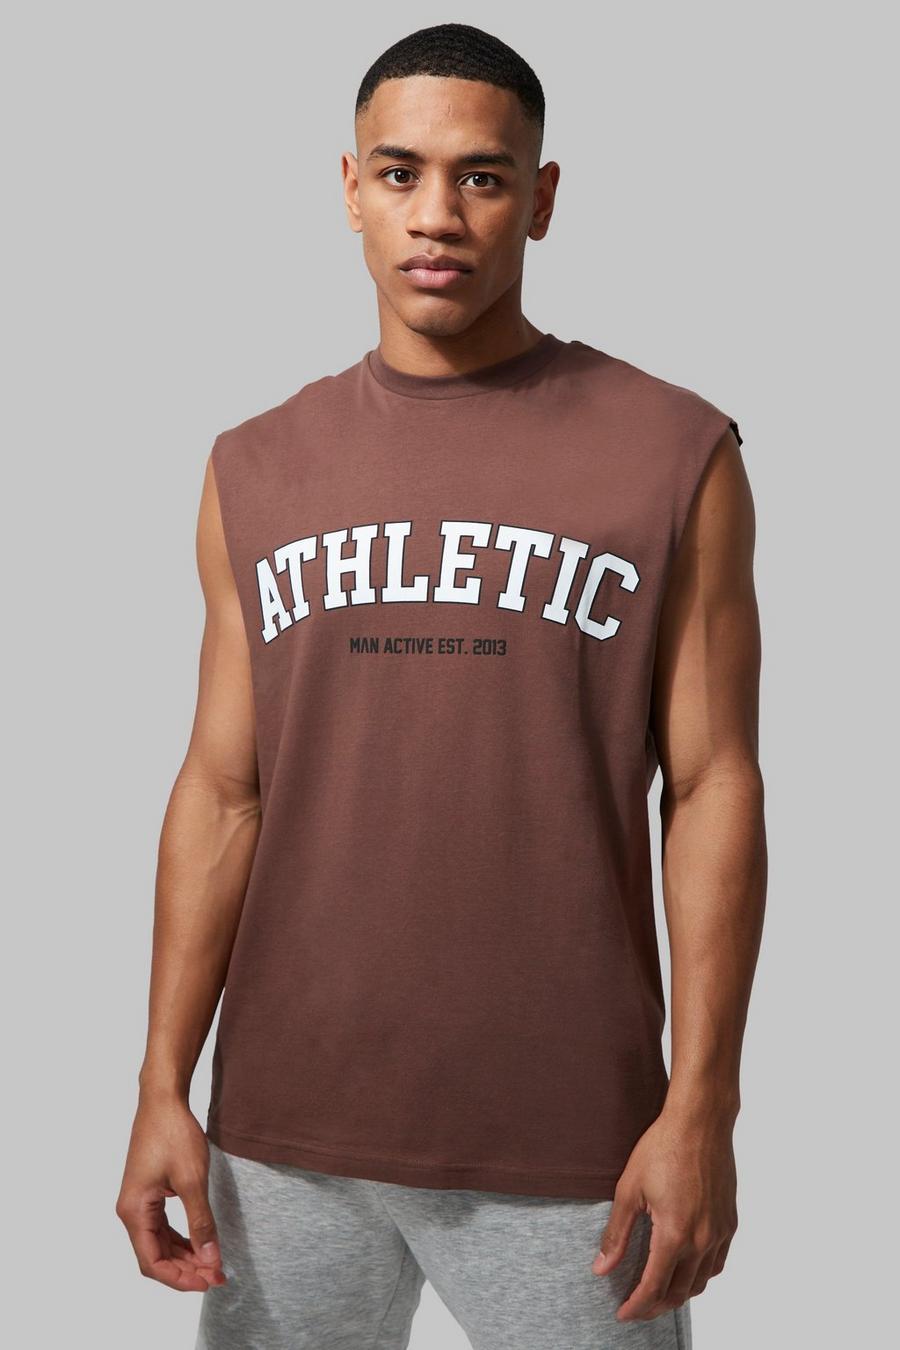 Man Active Gym Athletic Tank, Chocolate marrón